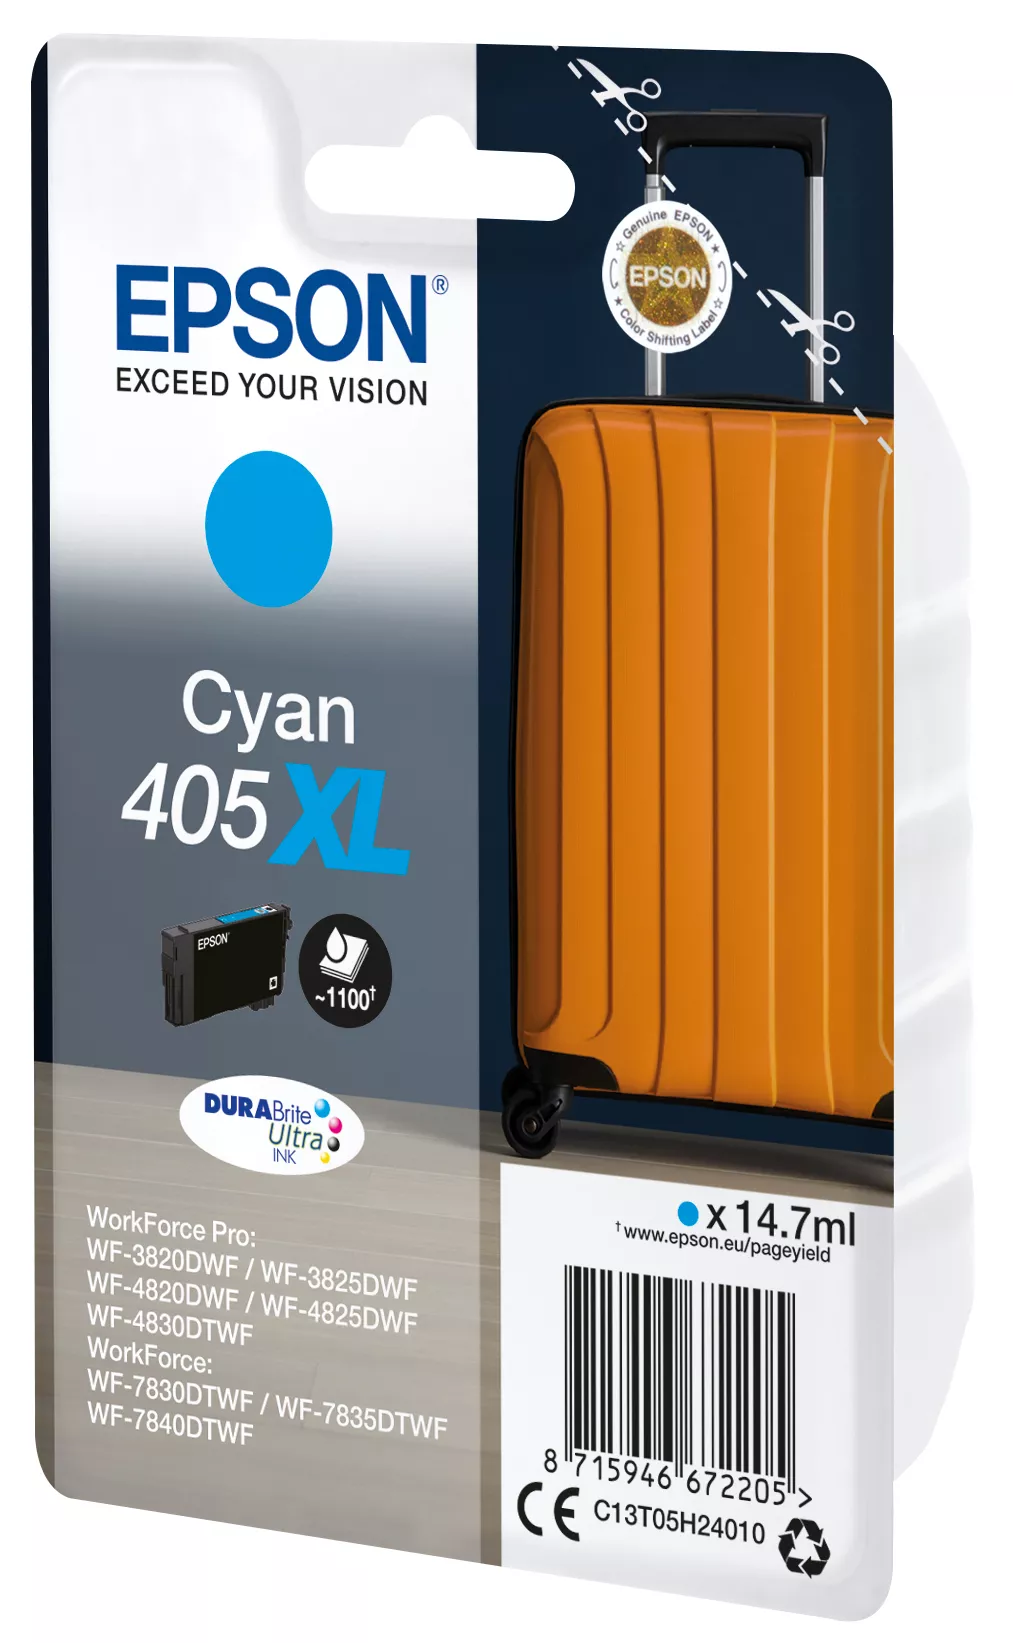 Achat EPSON Singlepack Cyan 405XL DURABrite Ultra Ink au meilleur prix